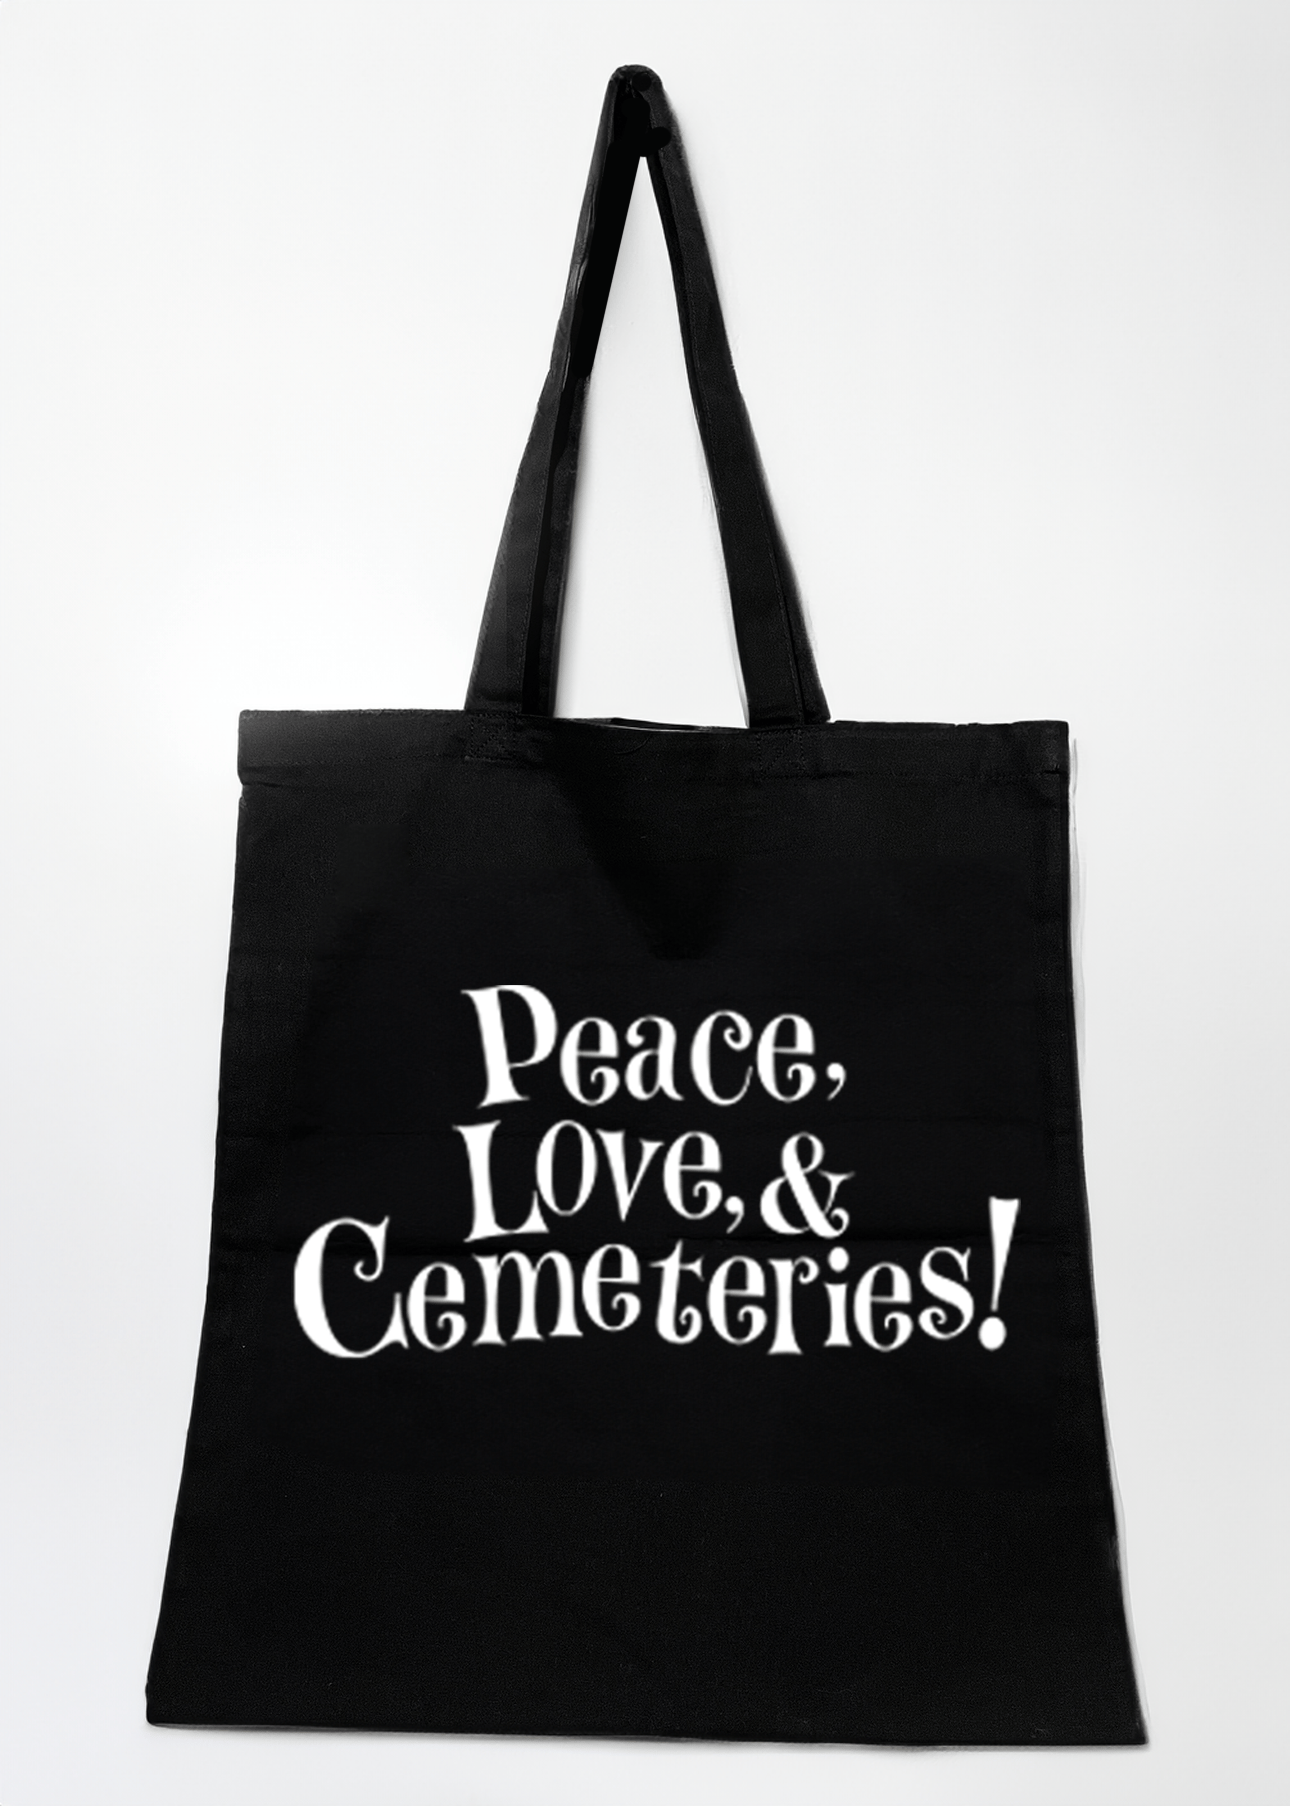 Peace, Love &, Cemeteries - Tote Bag